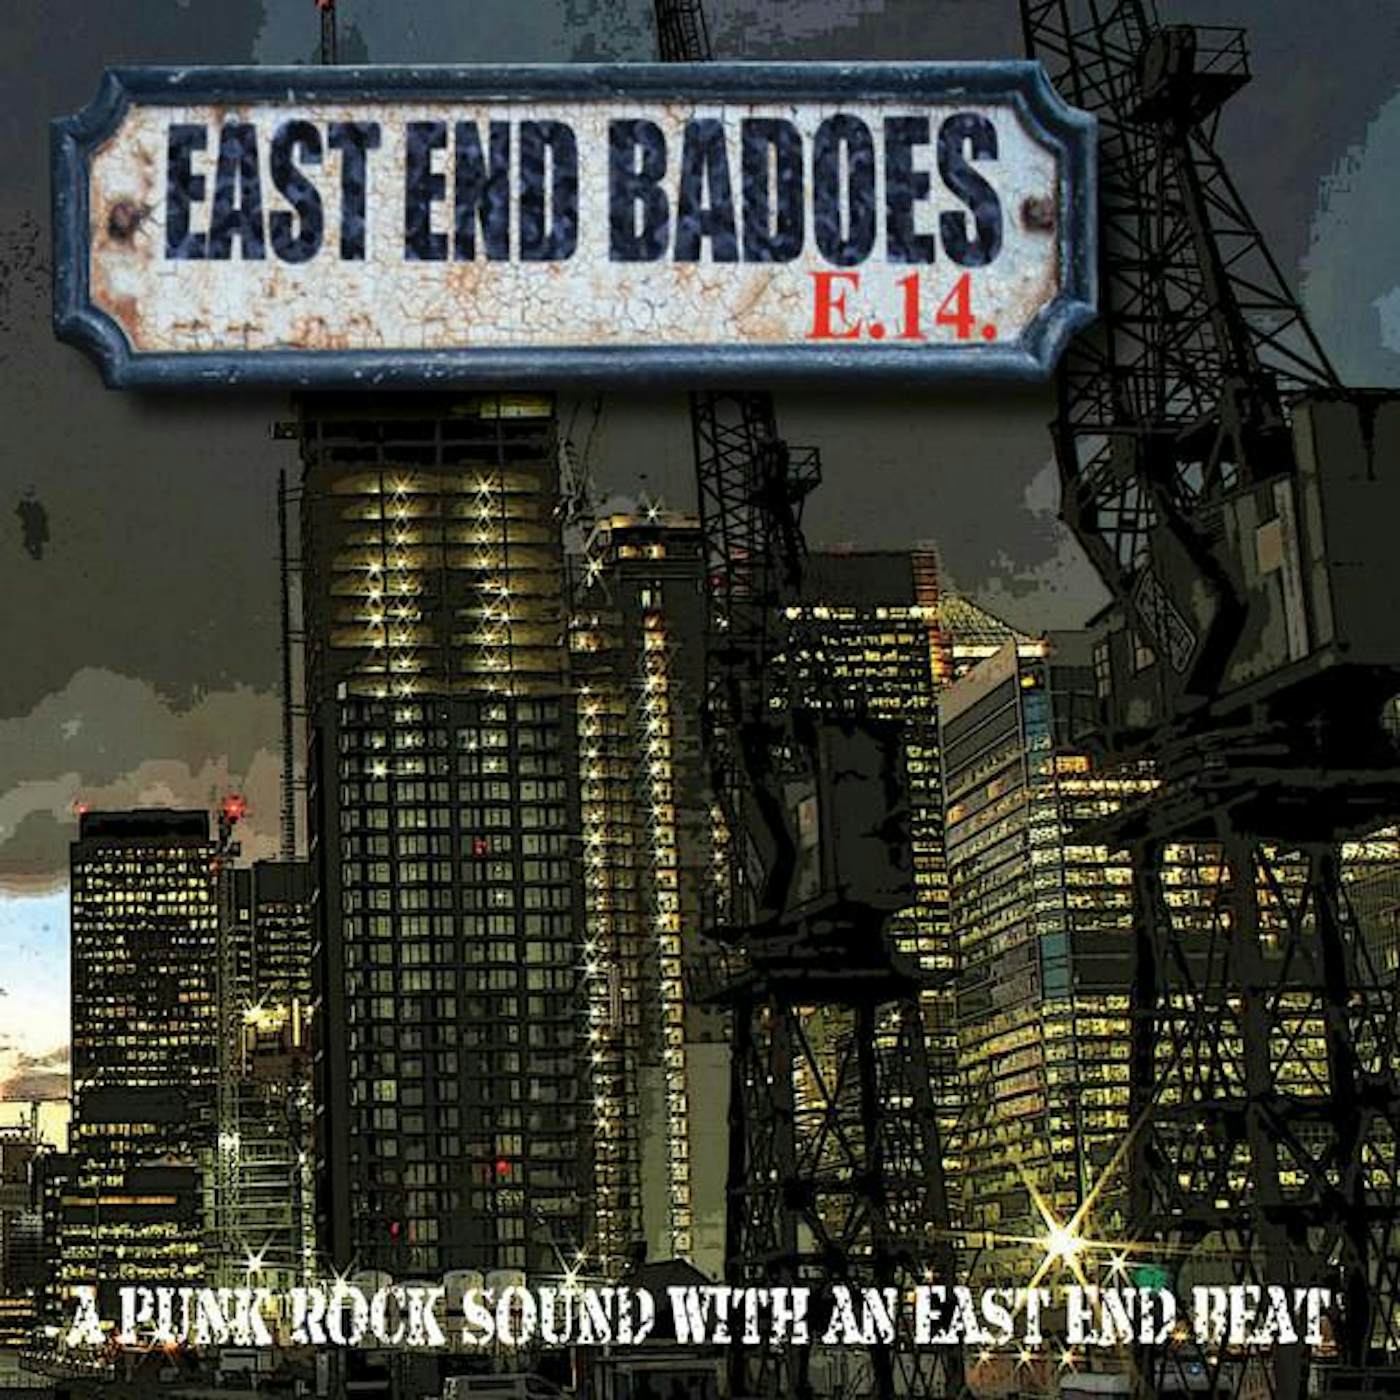 East End Badoes